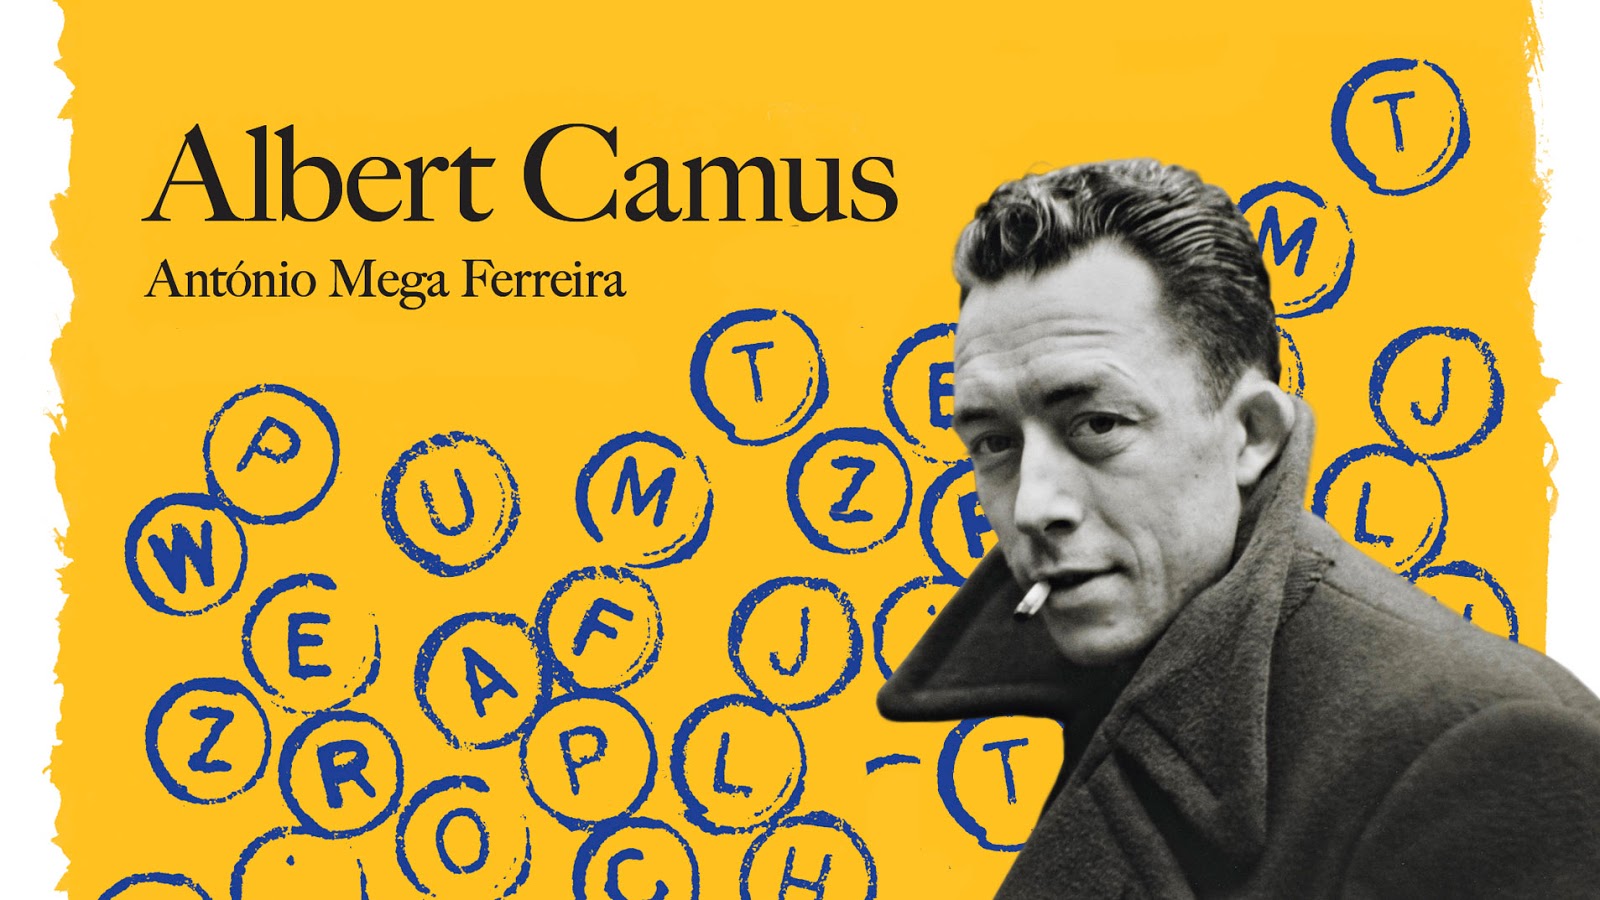 Se fosse vivo, Albert Camus completaria hoje 105 anos